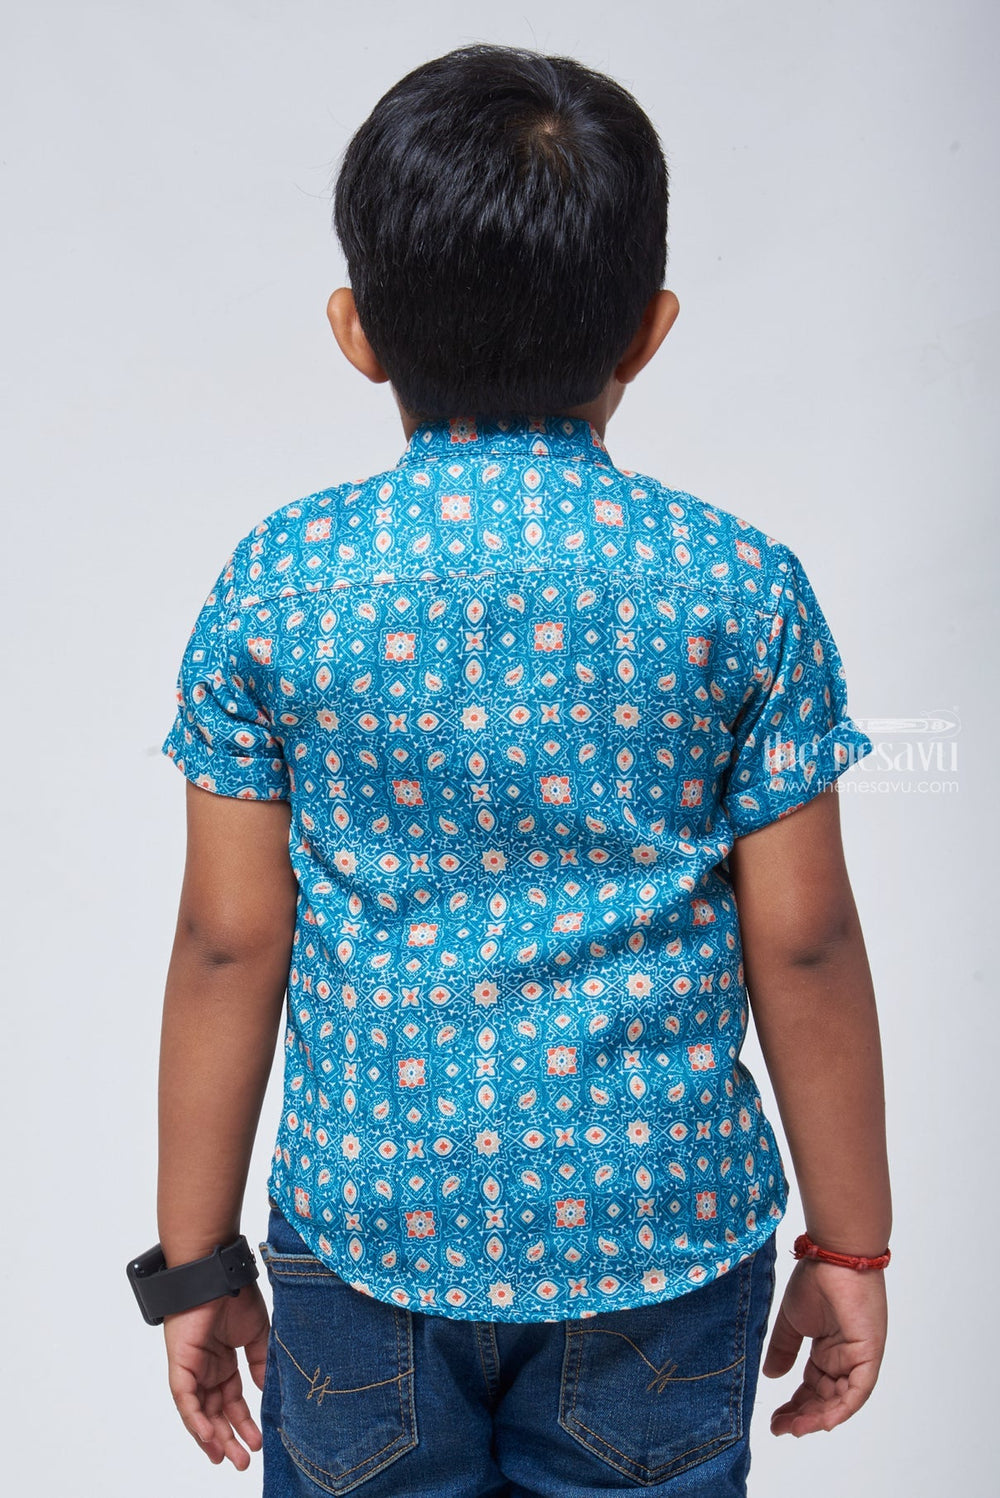 The Nesavu Boys Linen Shirt Indie Elegance: Linen Boys' Shirt with Intricate Traditional Prints for a Timeless Look Nesavu Intricate Traditional Printed Shirt for Boys | Baby Shirt Online | The Nesavu